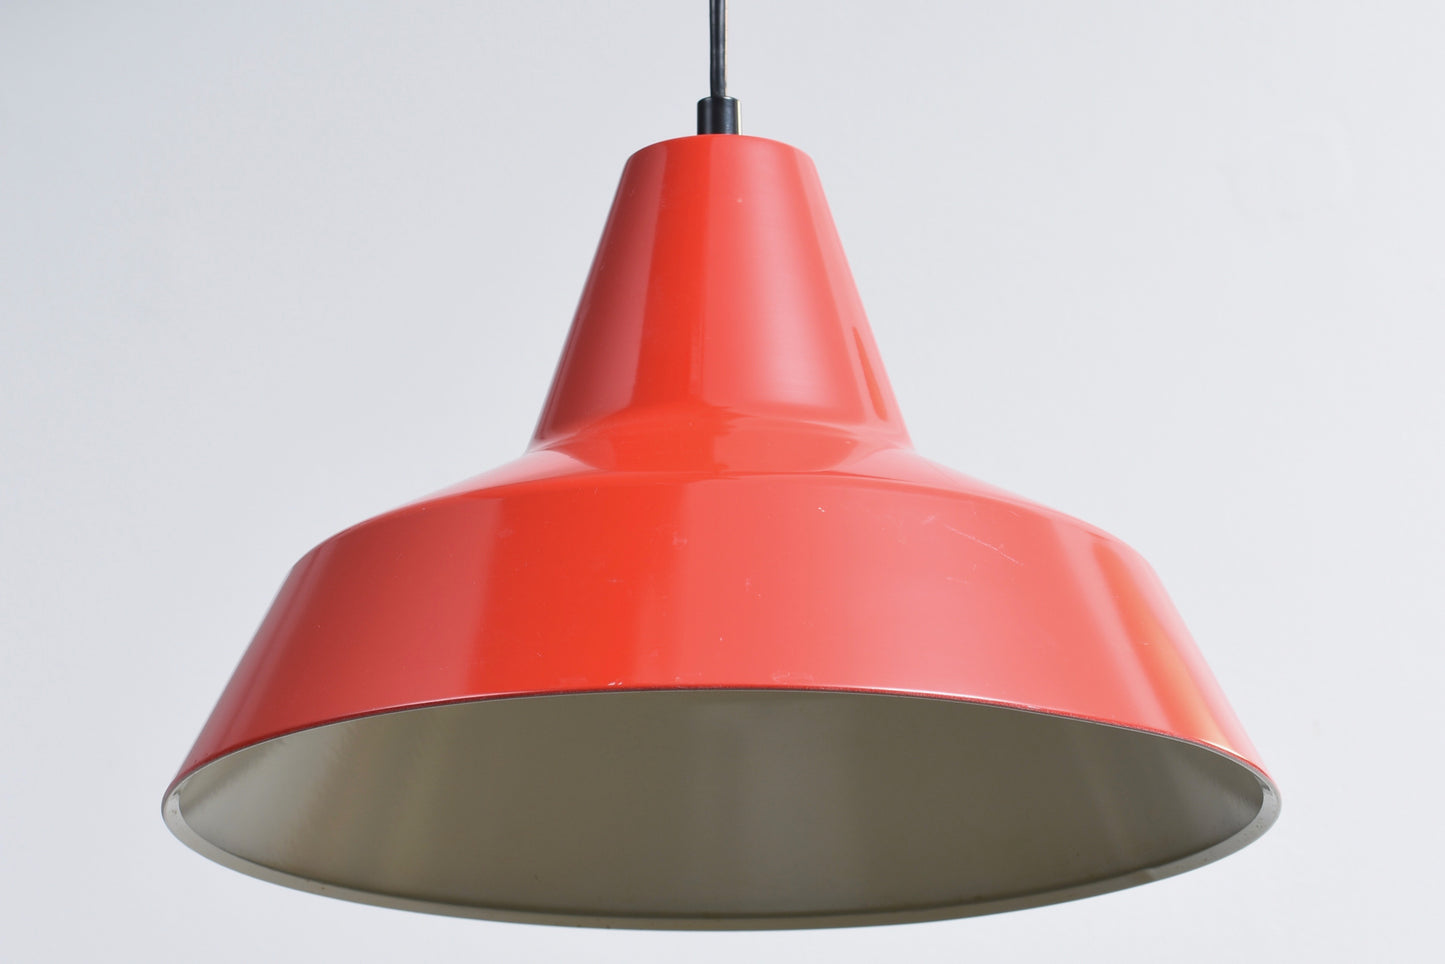 Vintage red enamel ceiling light by Lyskaer Belysning